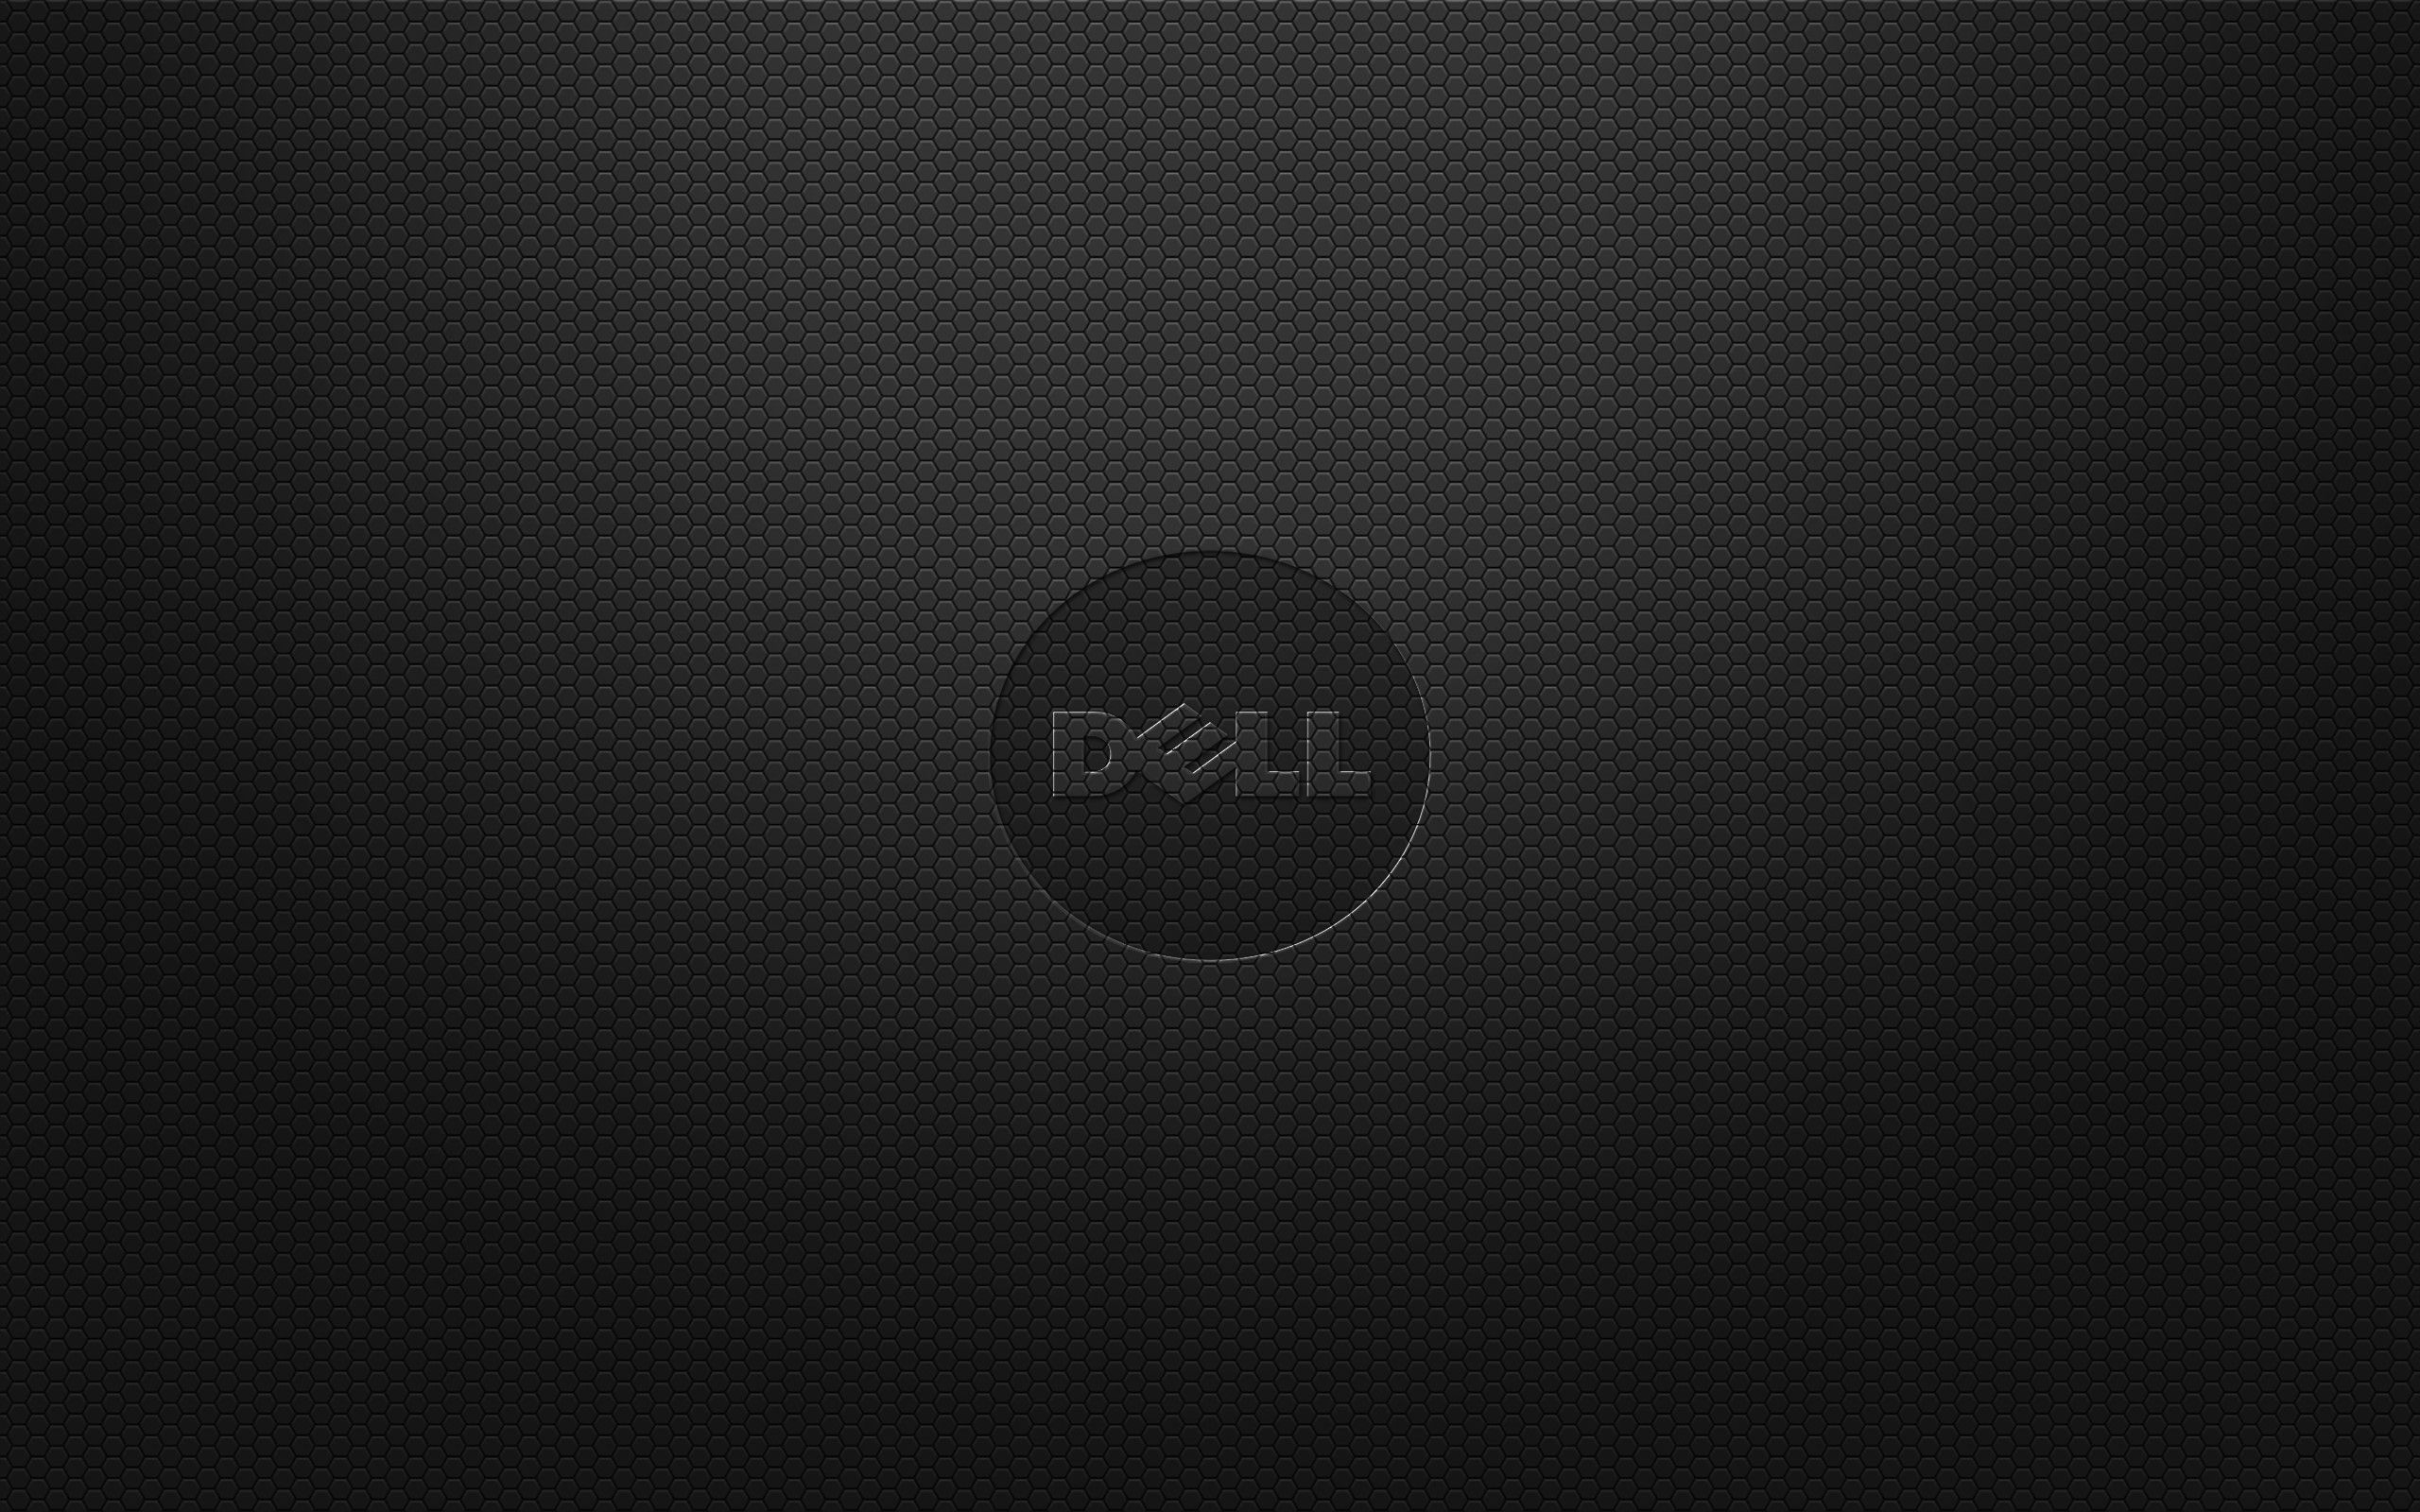  Dell Hintergrundbild 2560x1600. Dell 1080P, 2k, 4k Full HD Wallpaper, Background Free Download